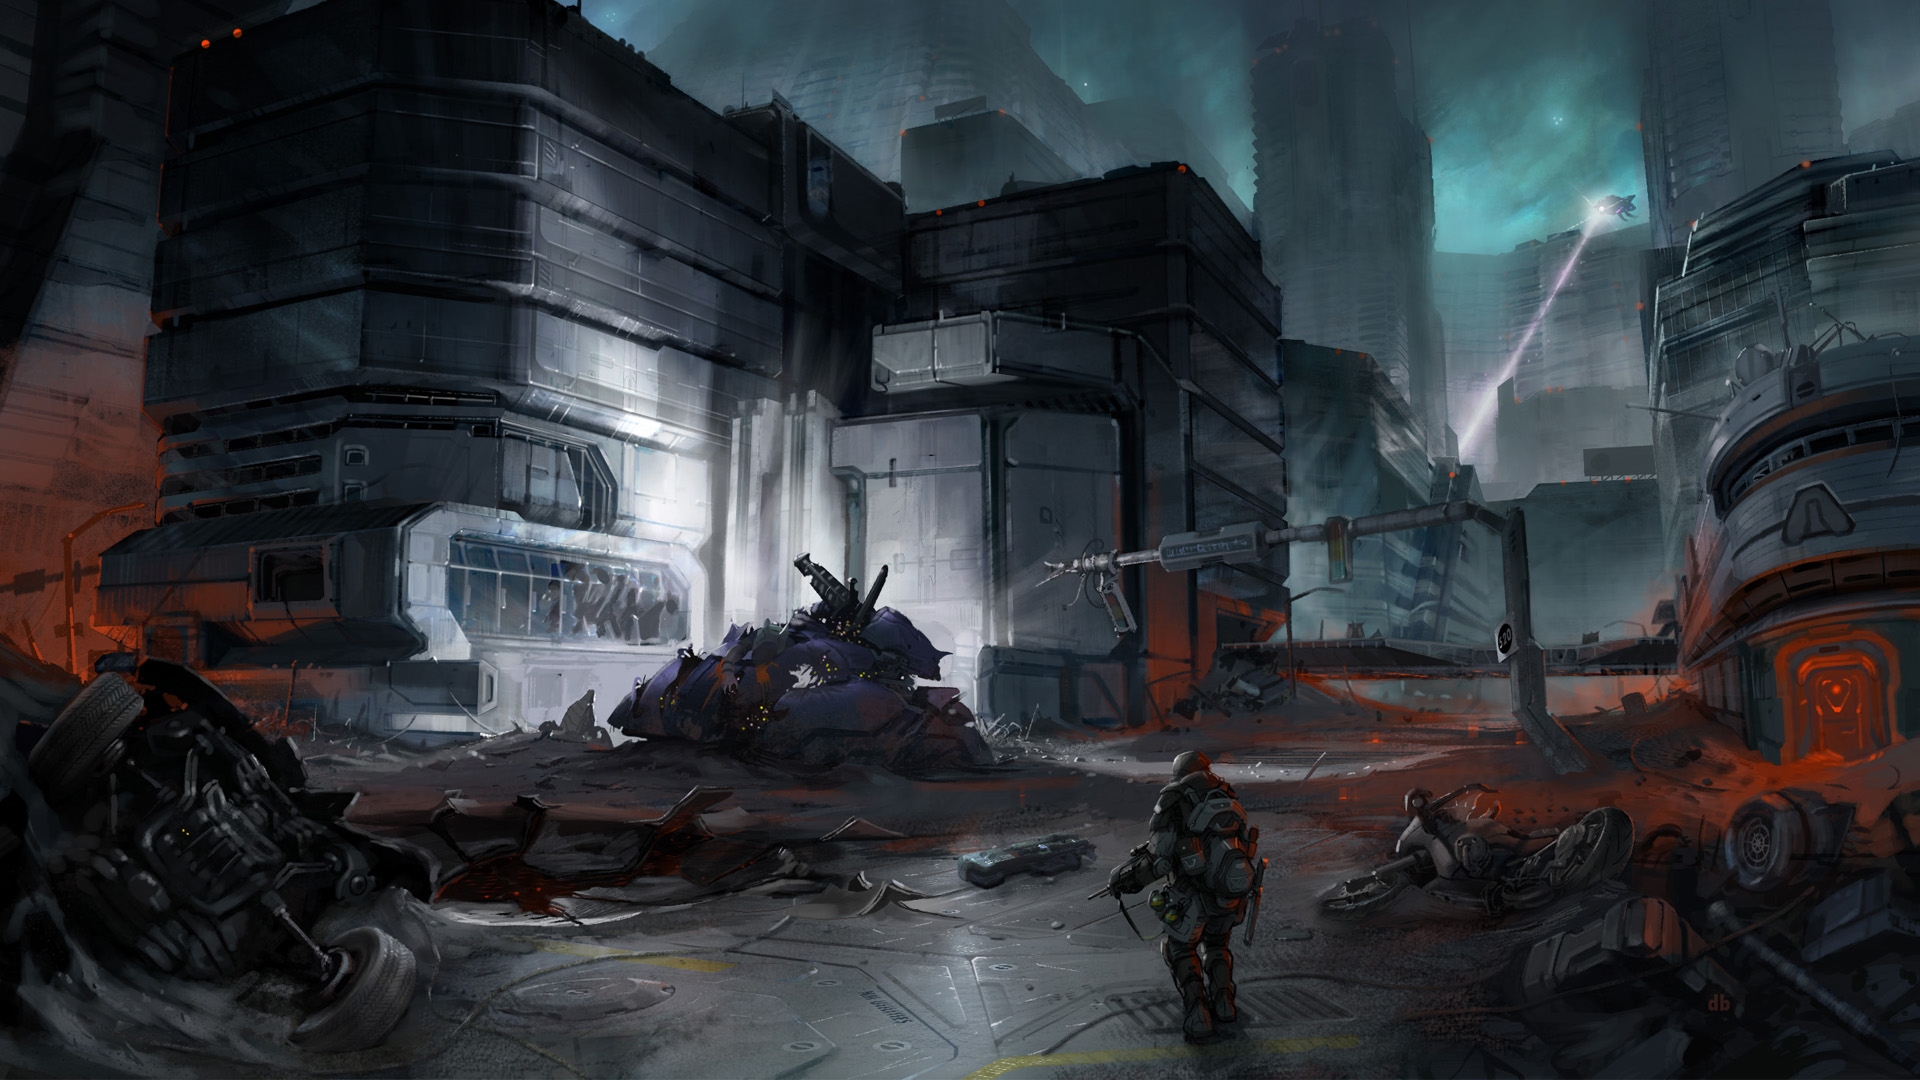 soldiers, video games, ruins, futuristic, Halo, Halo ODST, artwork - desktop wallpaper